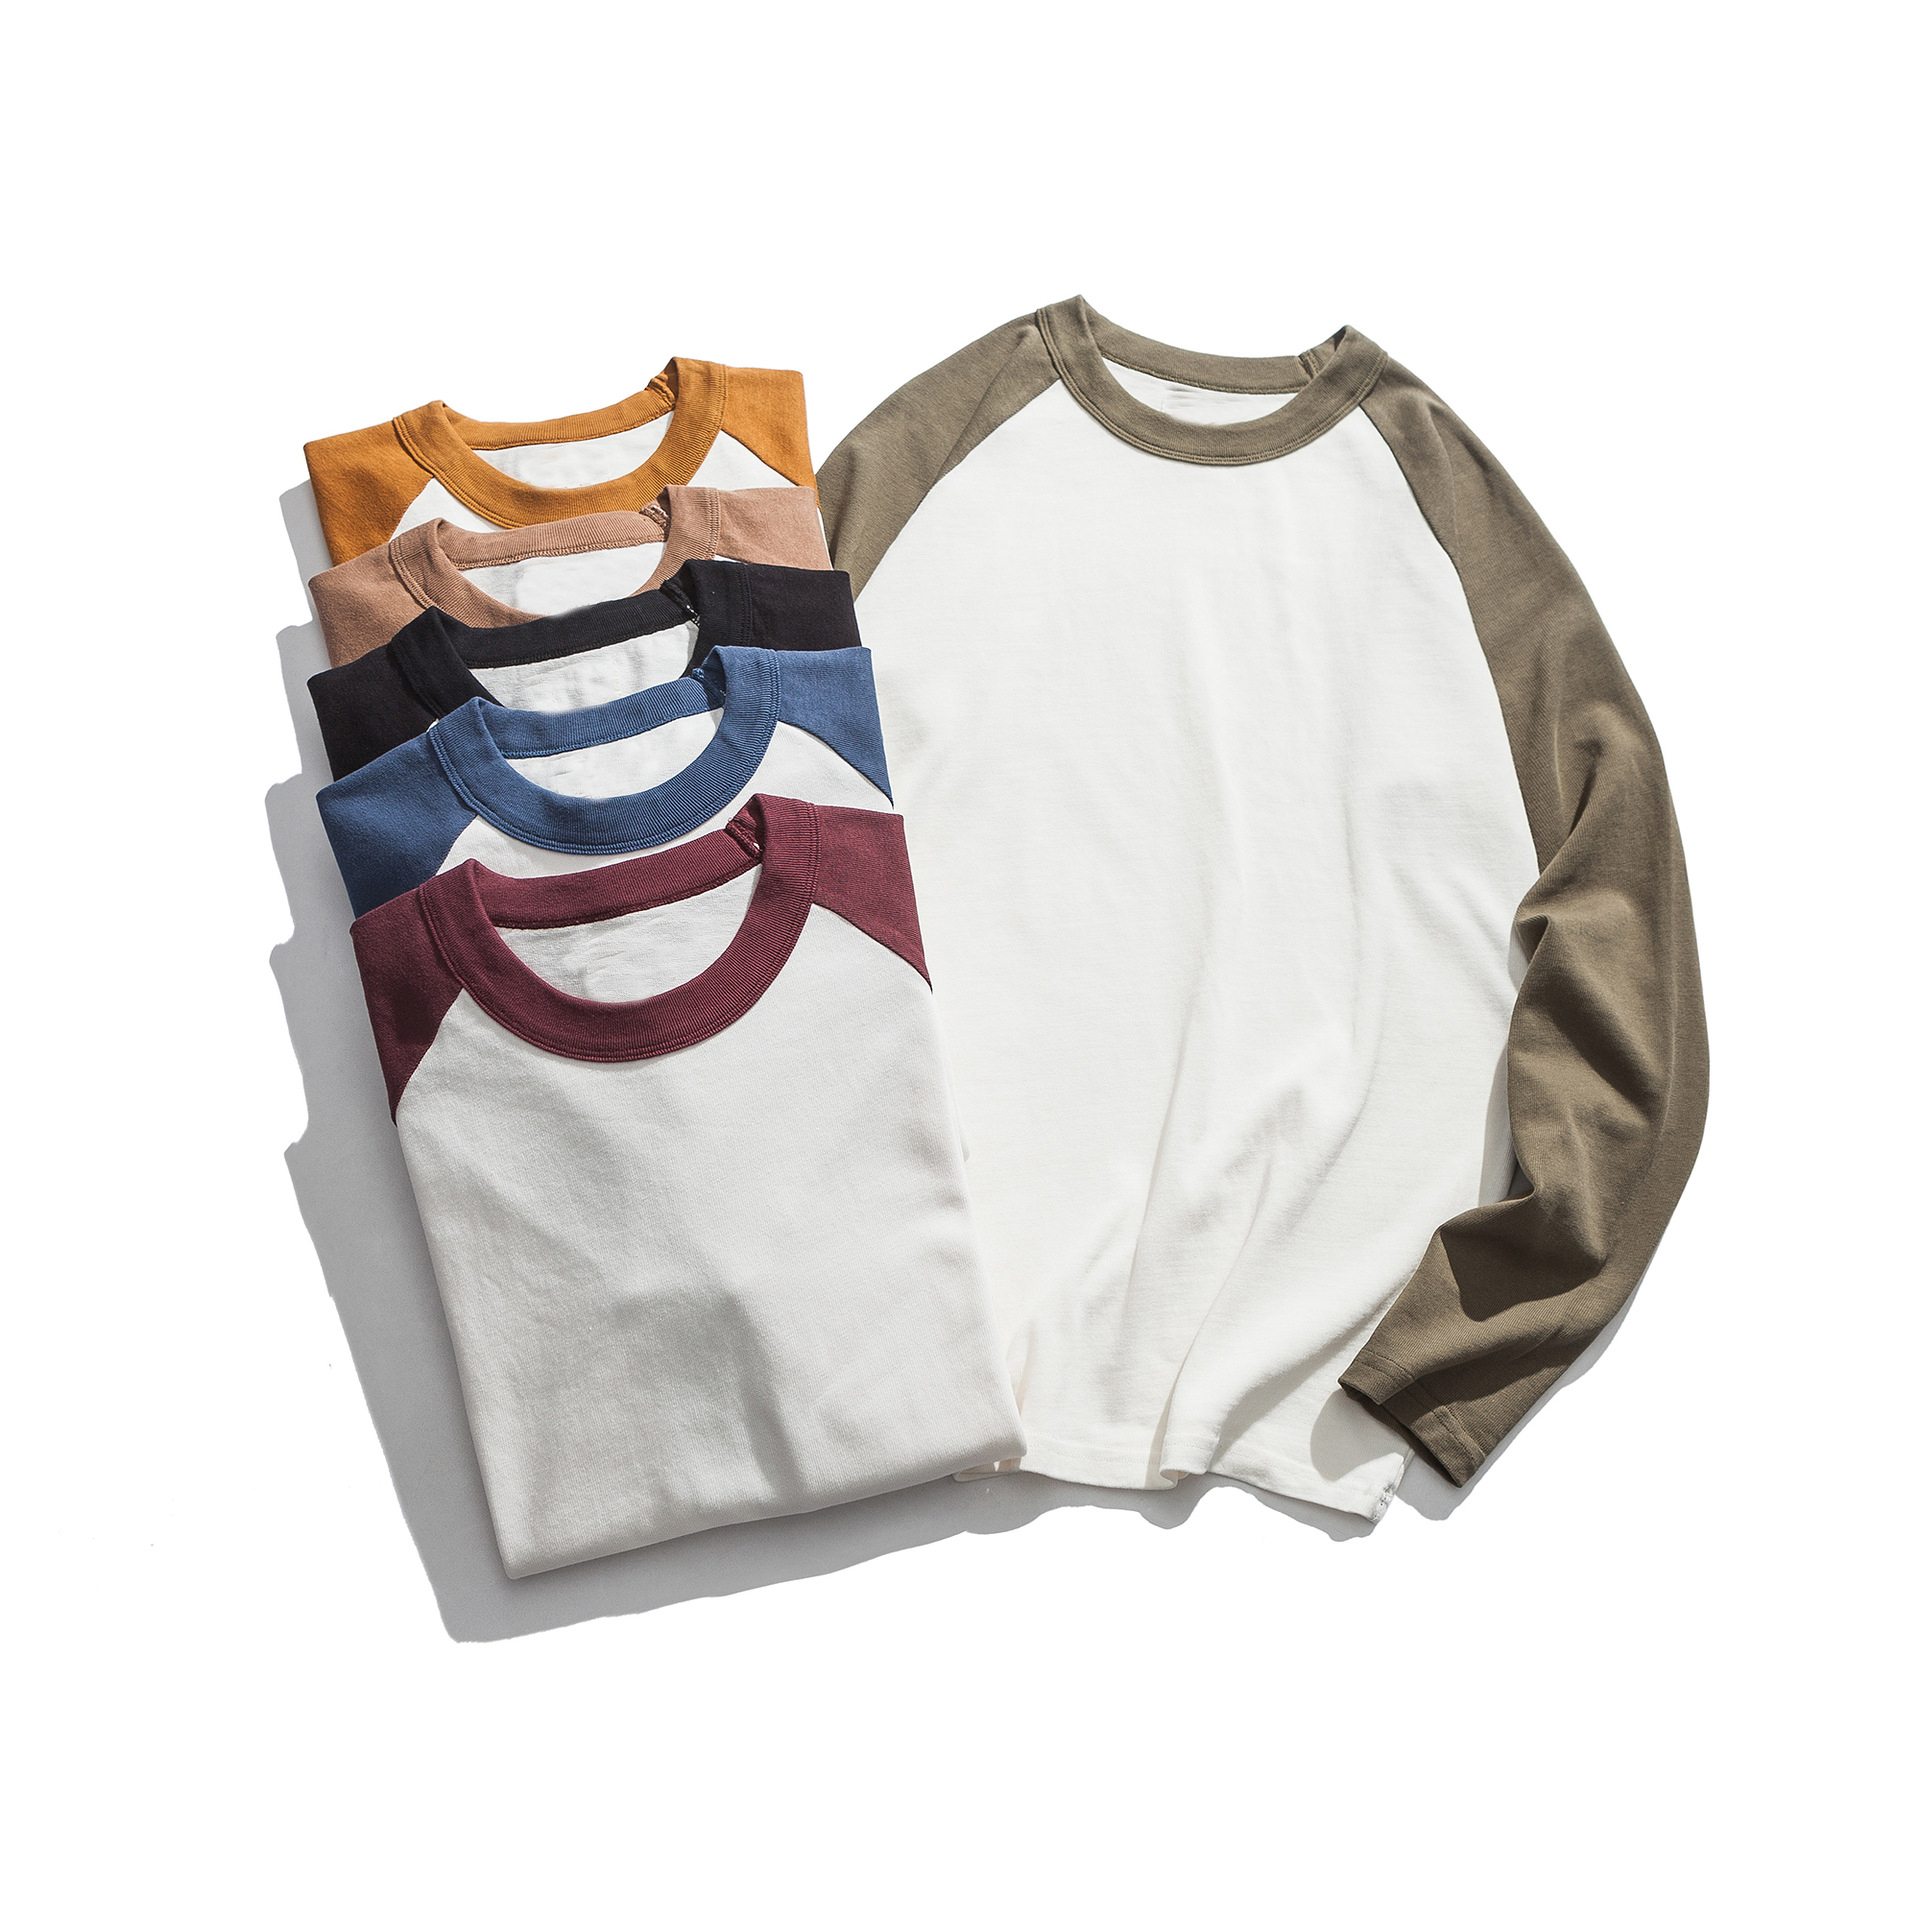 Low MOQ for Uniform Shirts - 100% cotton plain long sleeve t-shirt or custom embroidery logo t-shirt – Gift